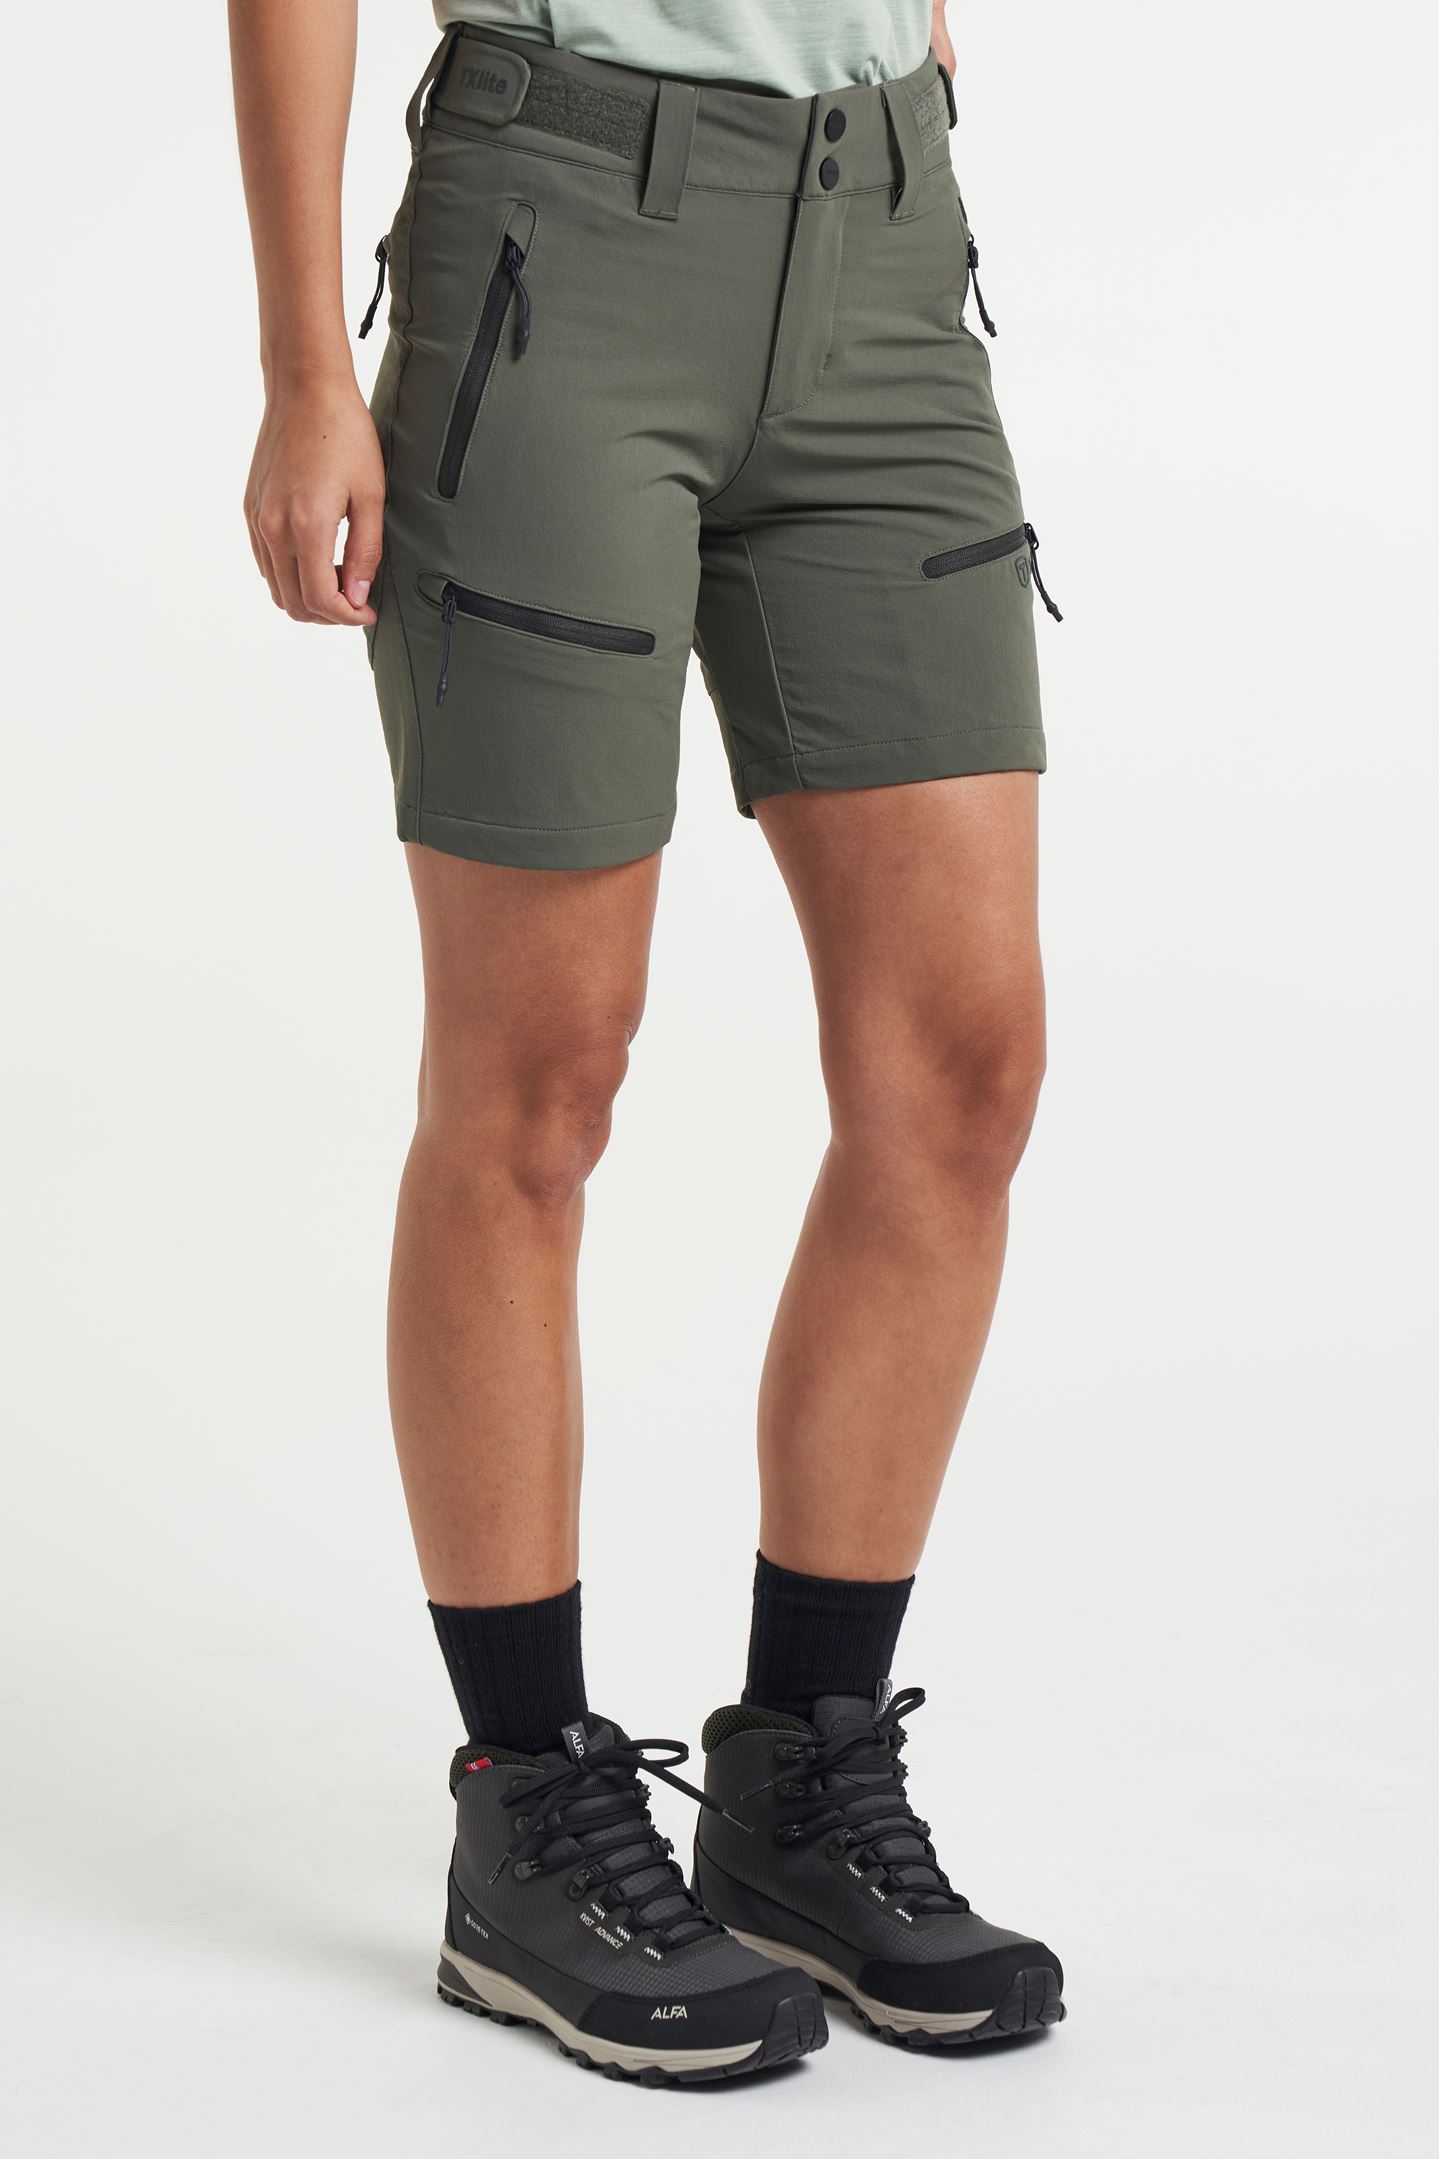 TXlite Flex Shorts - Women's Hiking Shorts with stretch - Dark Khaki